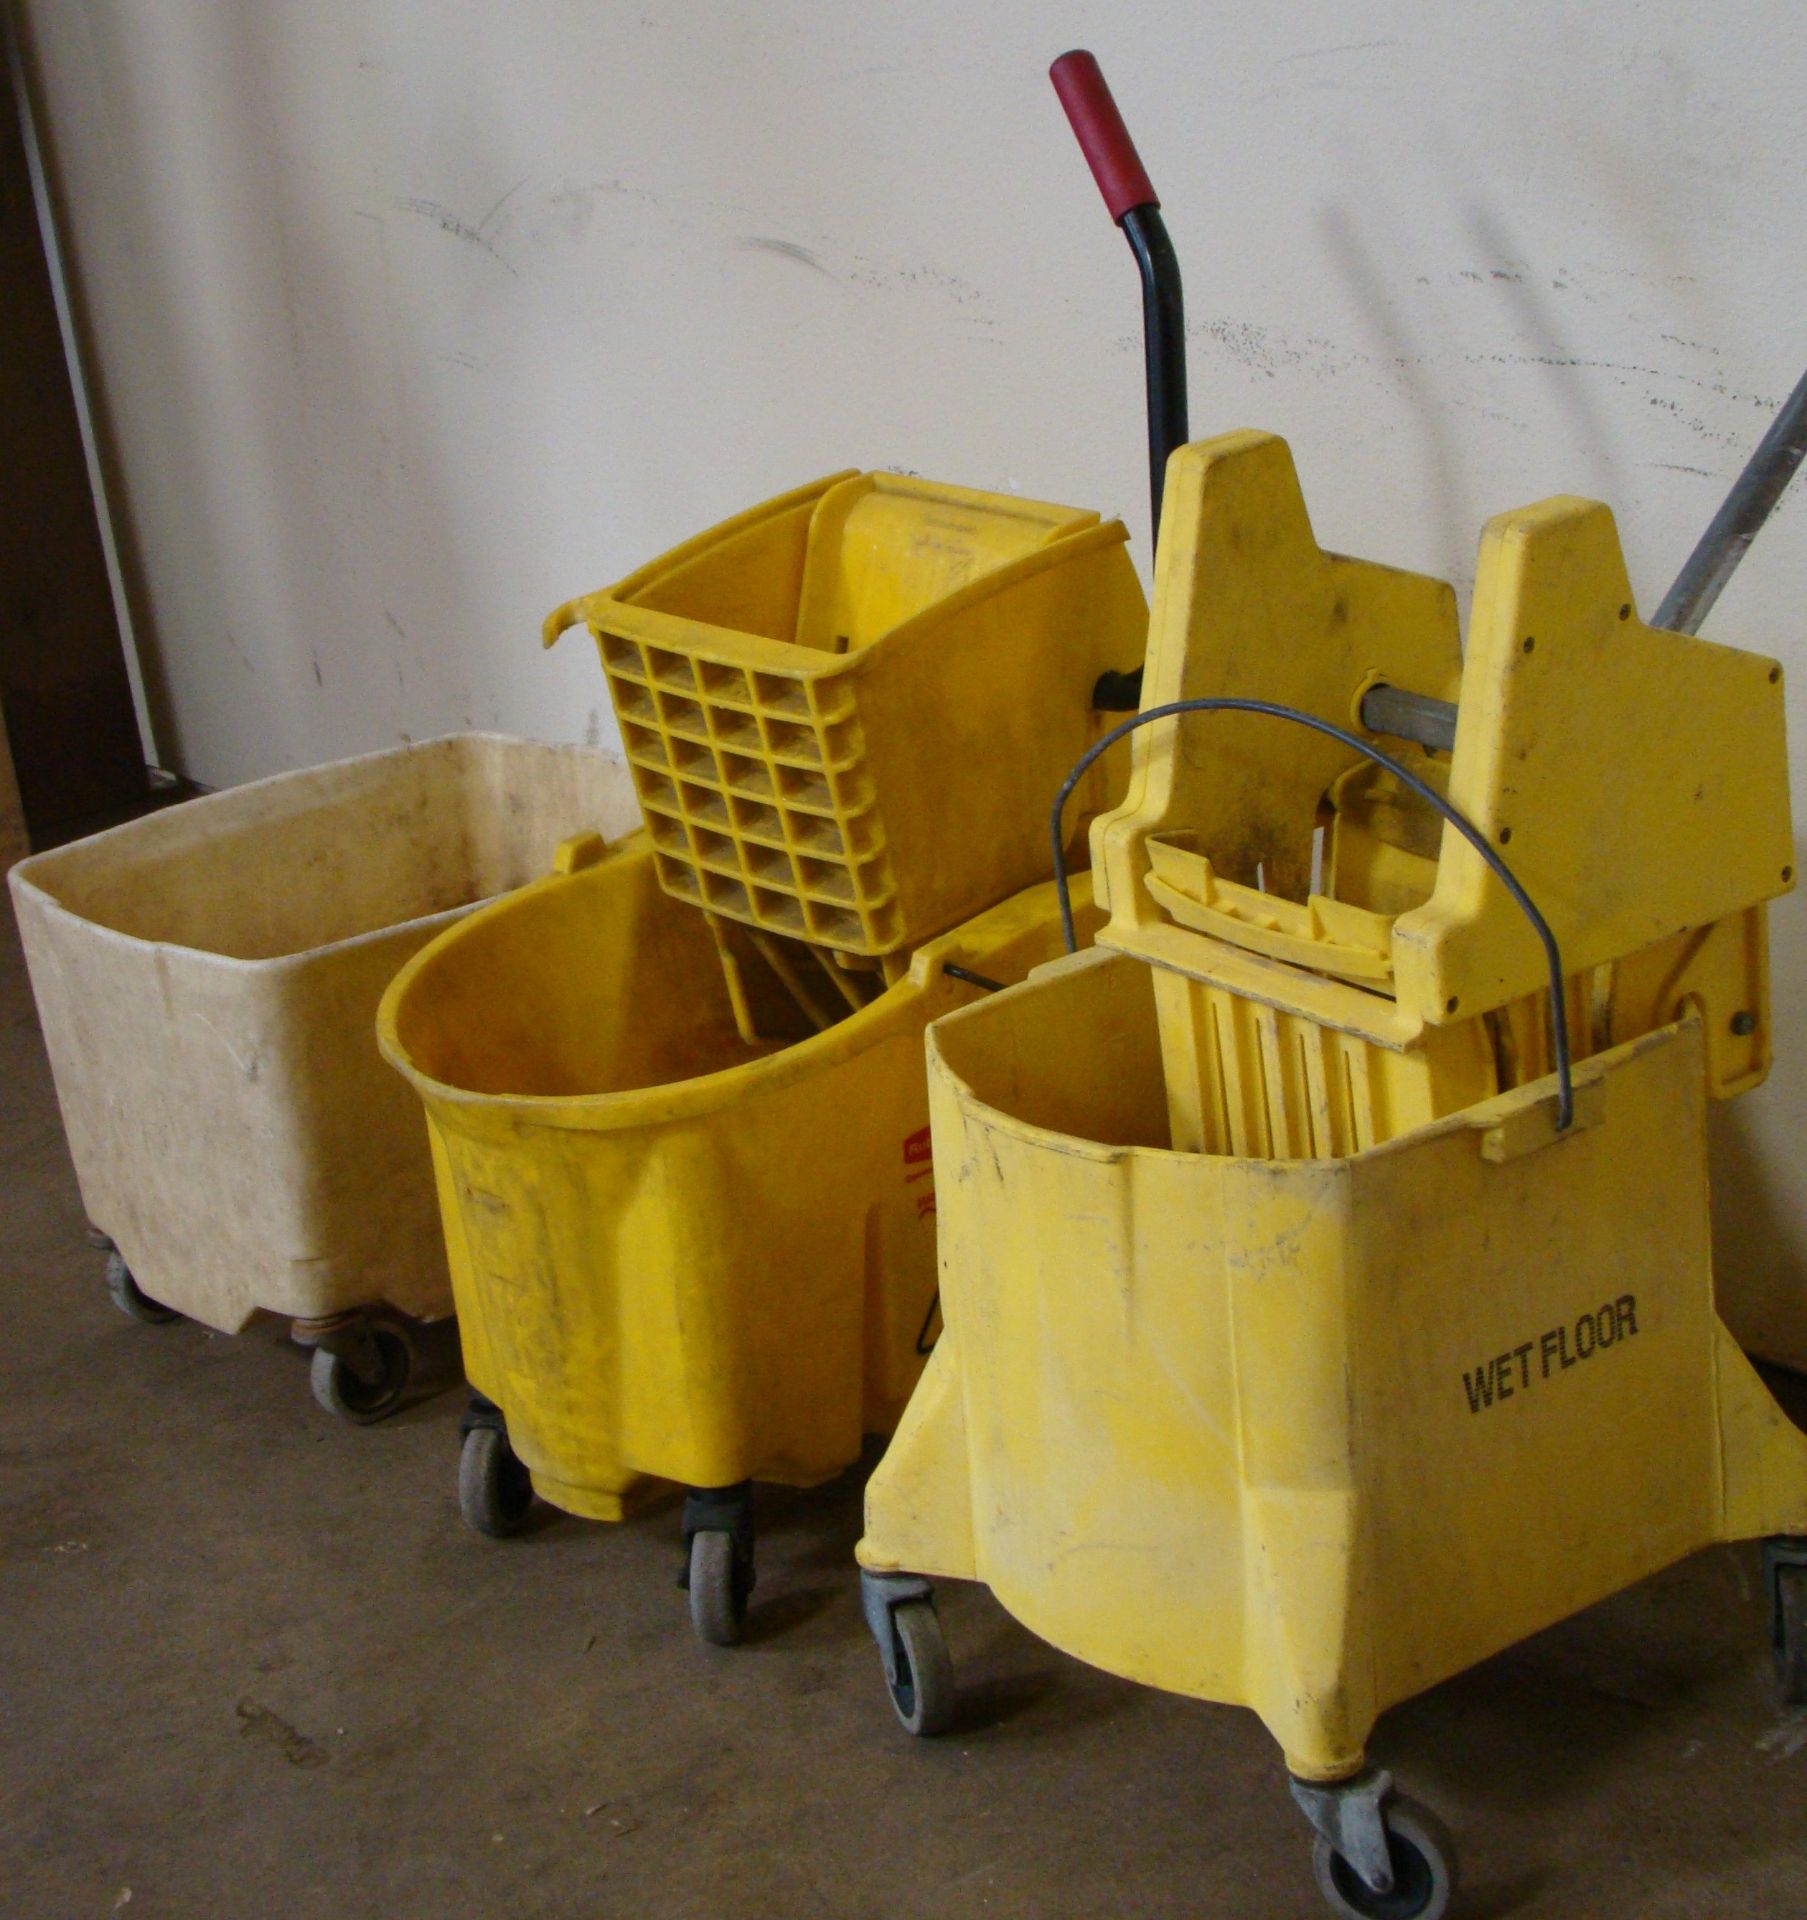 3 - Mop buckets on wheels - Image 2 of 2